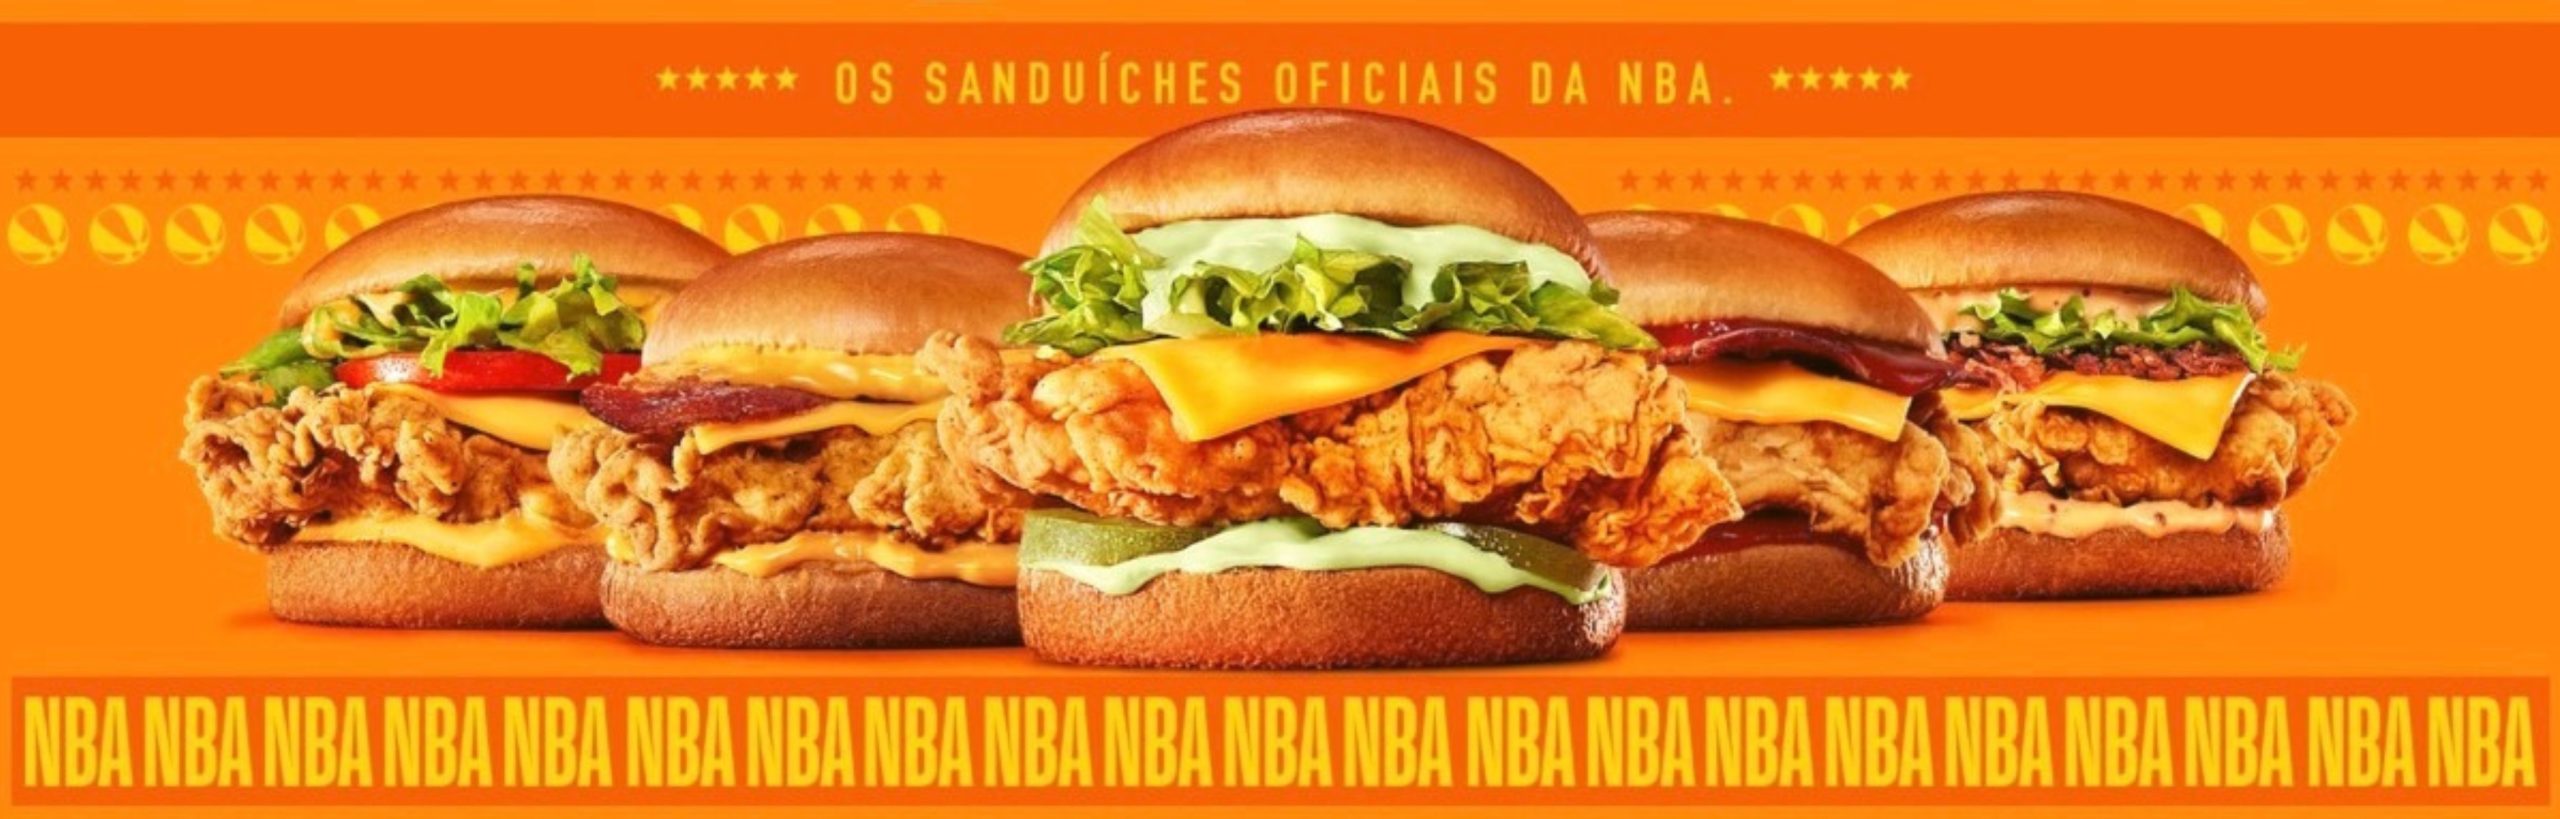 POPEYES lança sanduíches inspirados na NBA